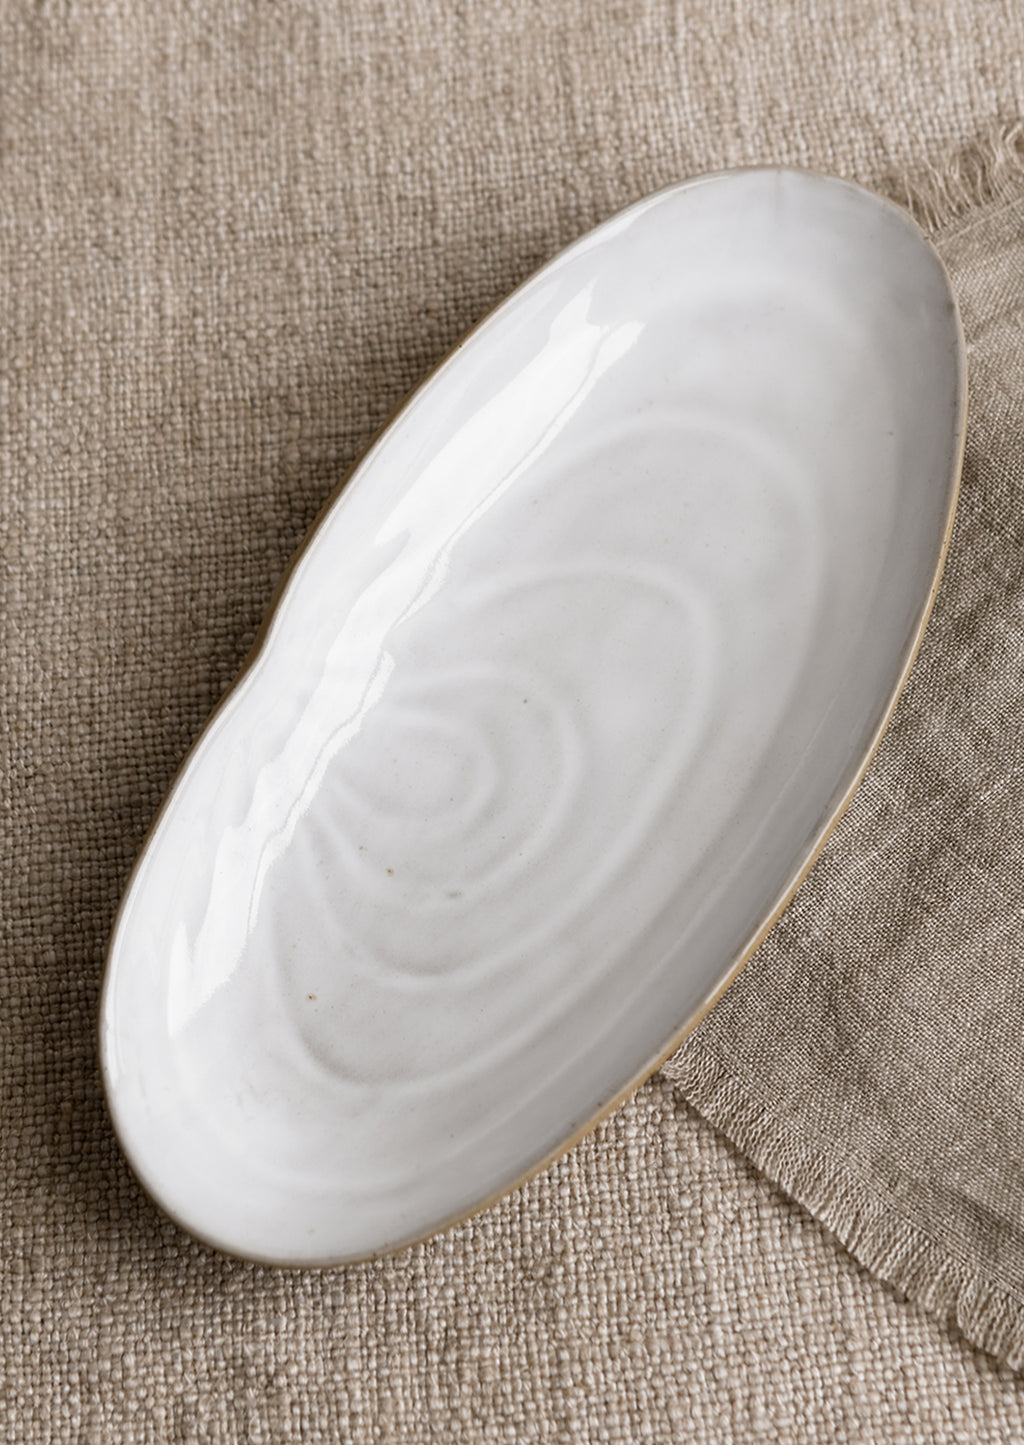 Serving Platter: A ceramic serving platter in shape of a shell.